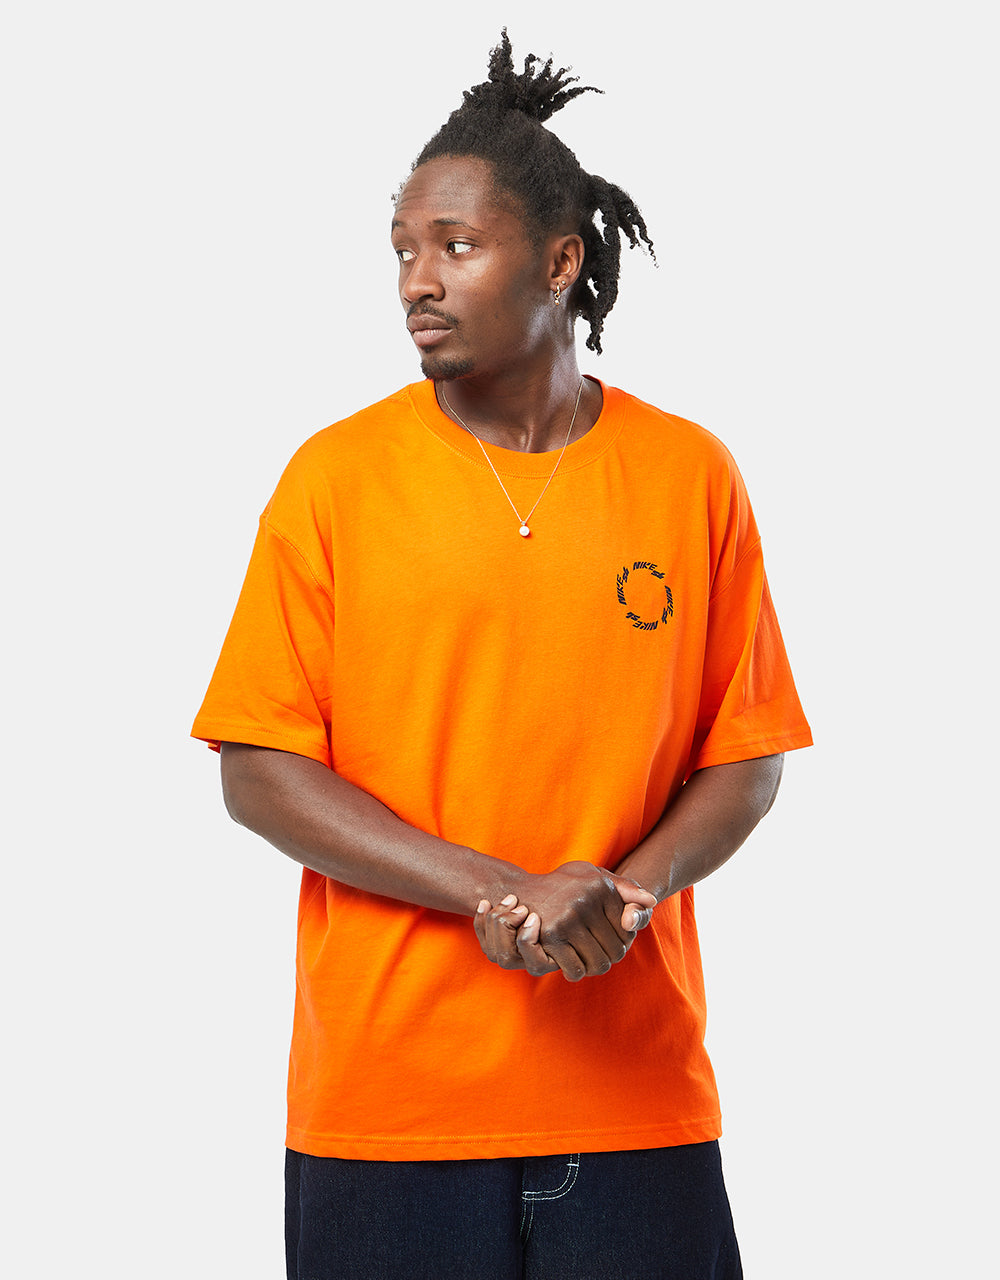 Nike SB Wheel T-Shirt - Safety Orange